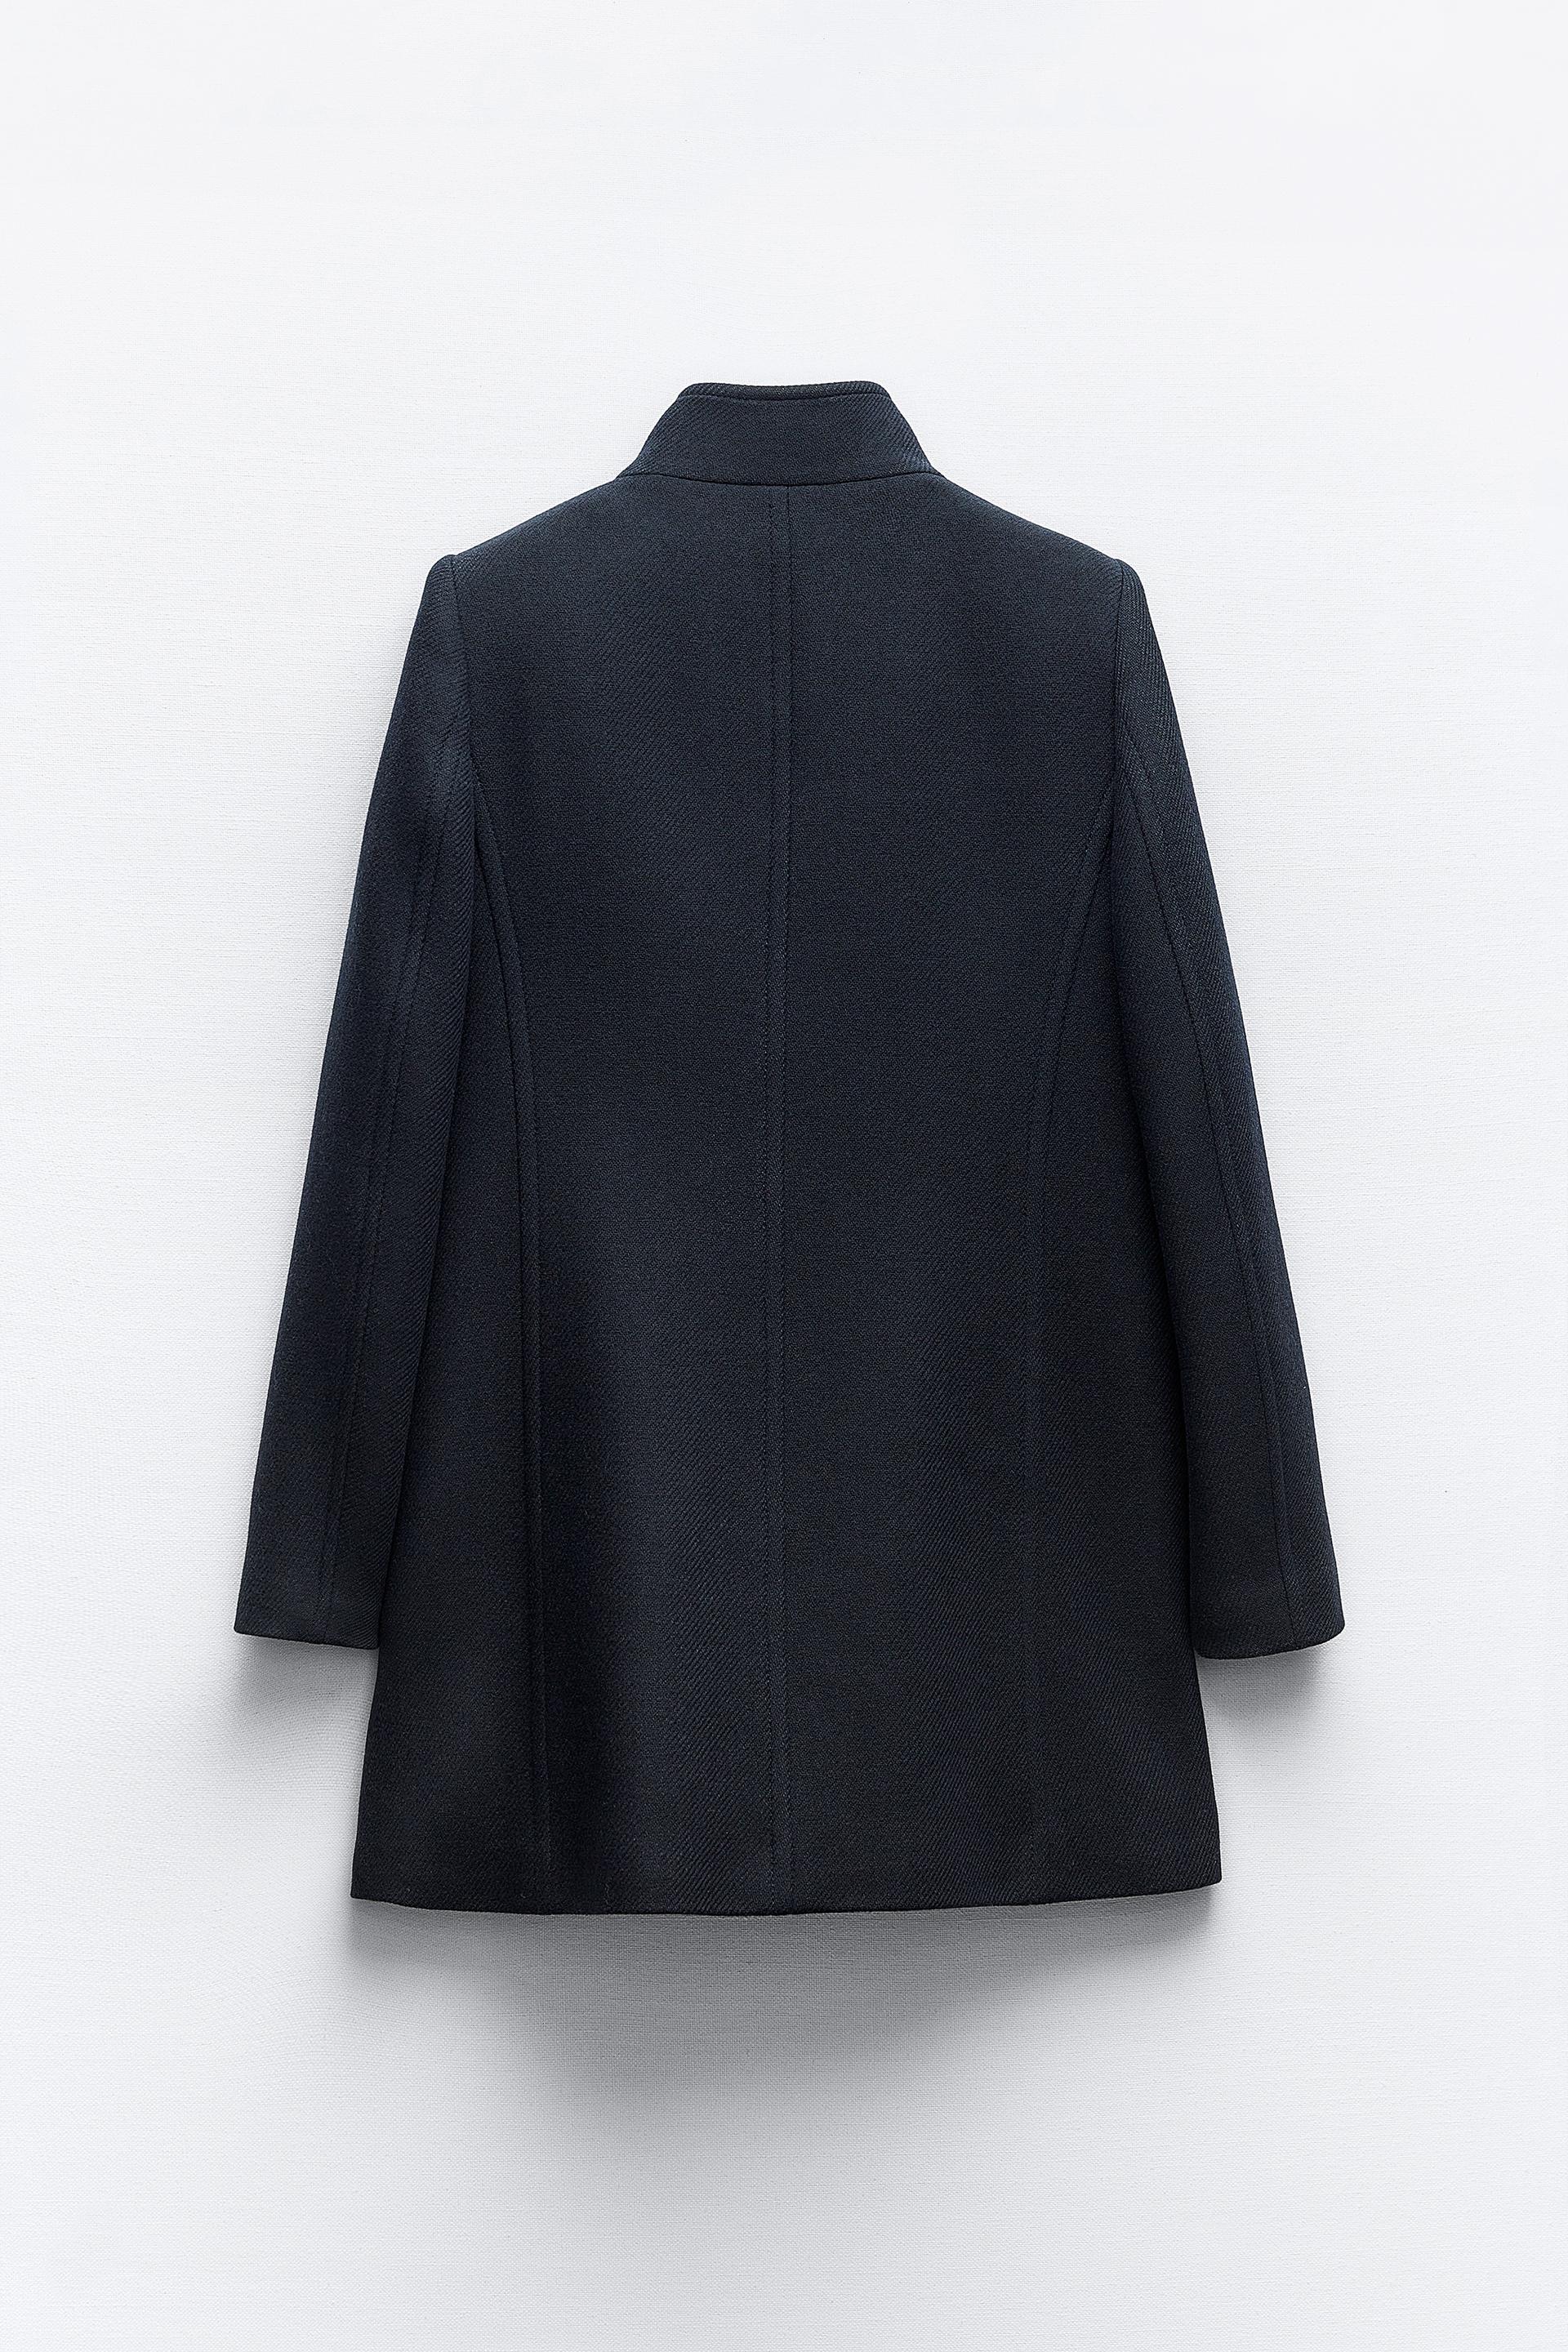 Zara Manteco Women Belted Wool Double Breasted Coat Black 2006/744 Size XS